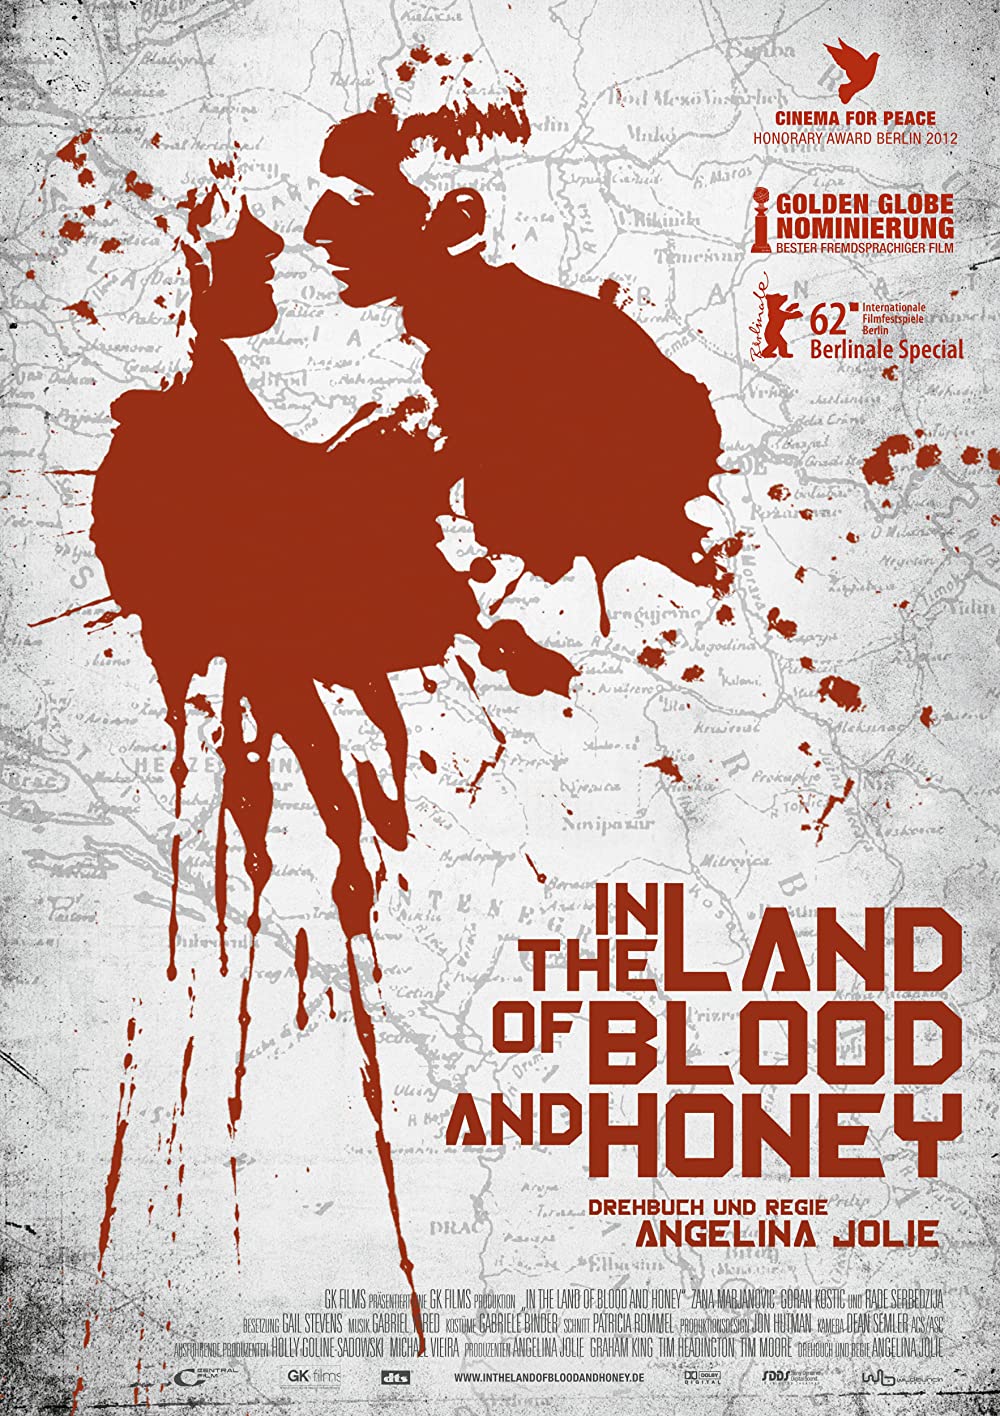 Filmbeschreibung zu In the Land of Blood and Honey